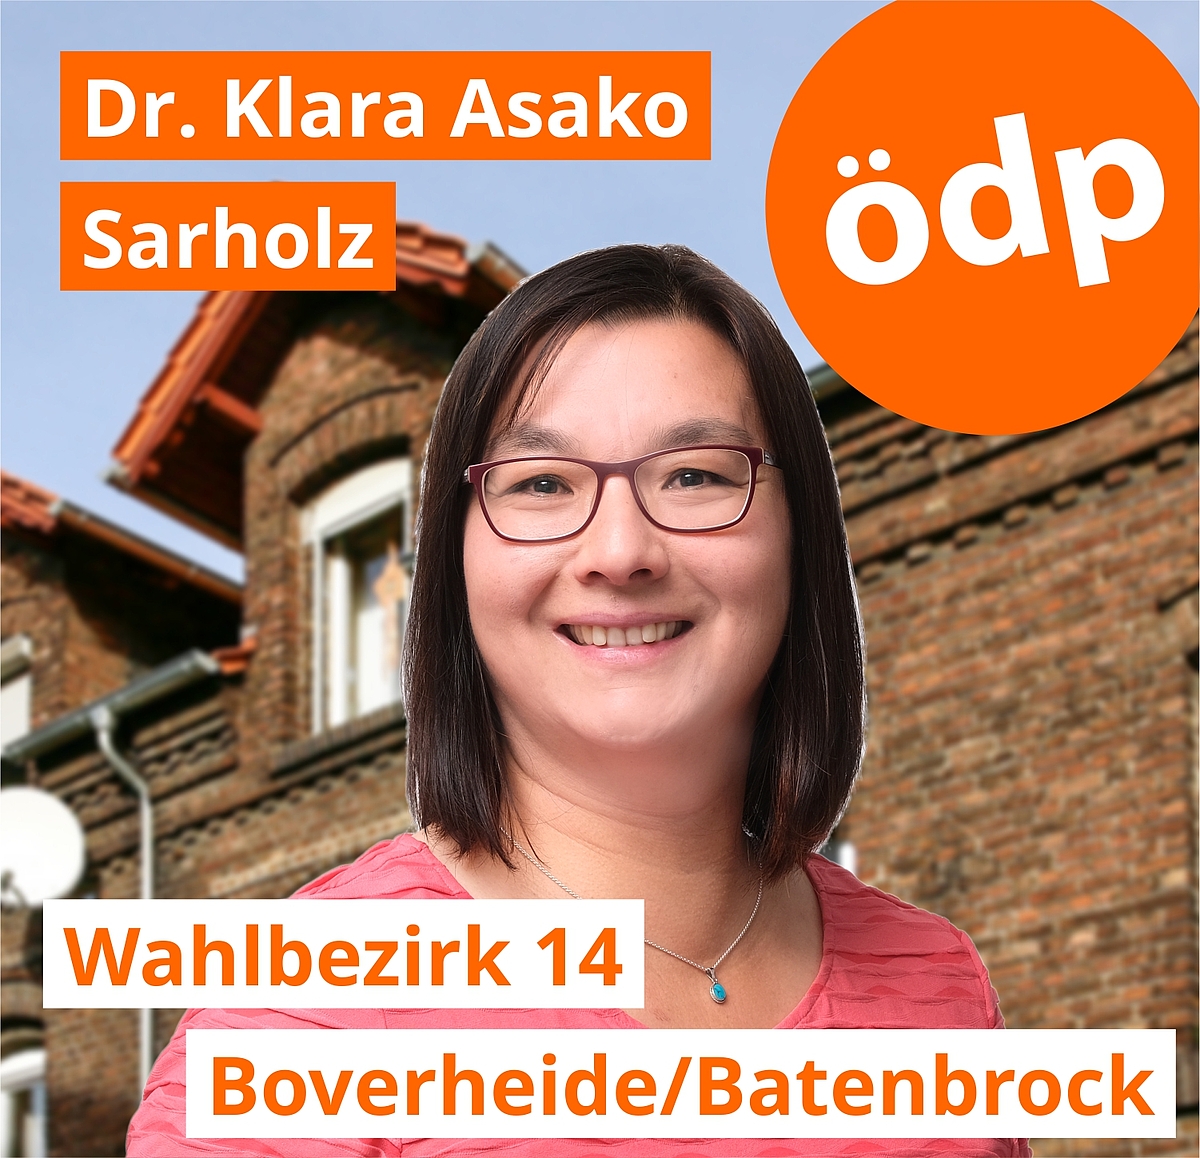 Dr. Klara Asako Sarholz | Wahlbezirk 14 | Boverheide/Batenbrock